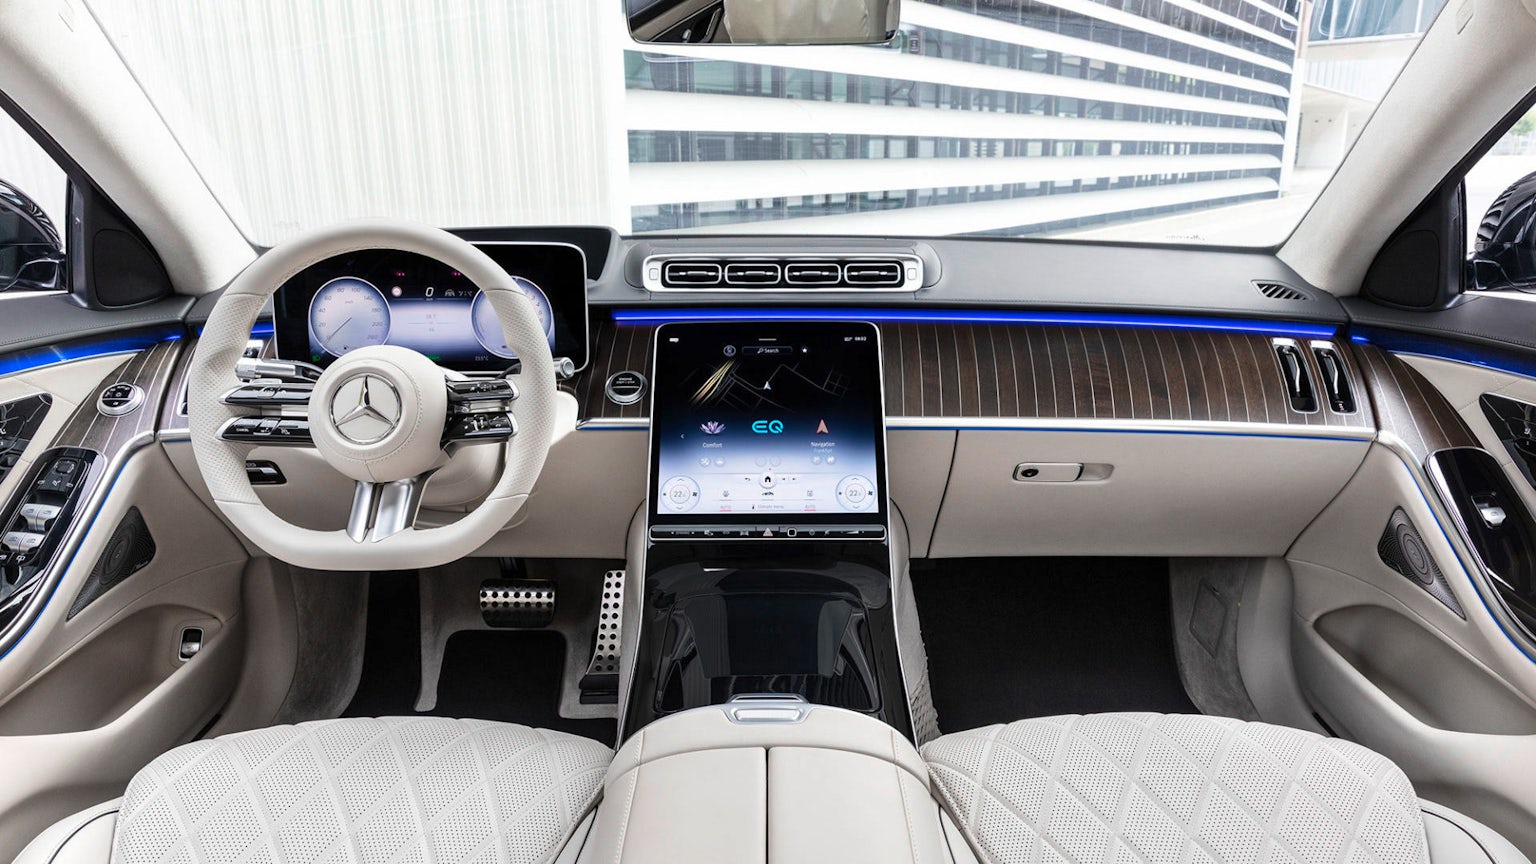 Mercedes S Class Interior White E1647339971956 ?auto=format&cs=tinysrgb&fit=clip&ixlib=rb 1.1.0&q=60&w=1536